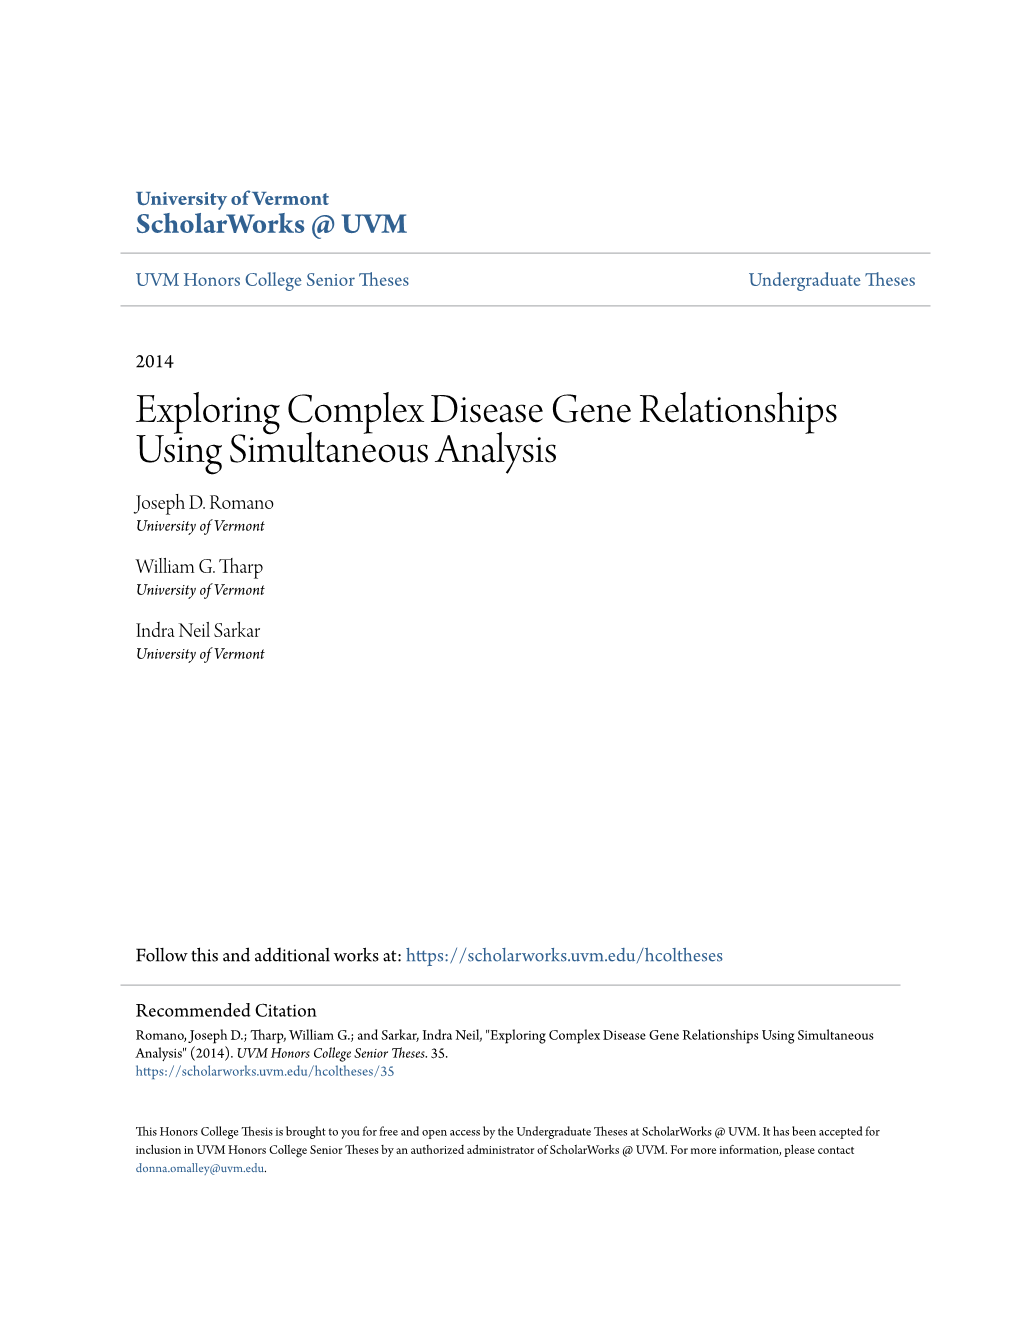 Exploring Complex Disease Gene Relationships Using Simultaneous Analysis Joseph D